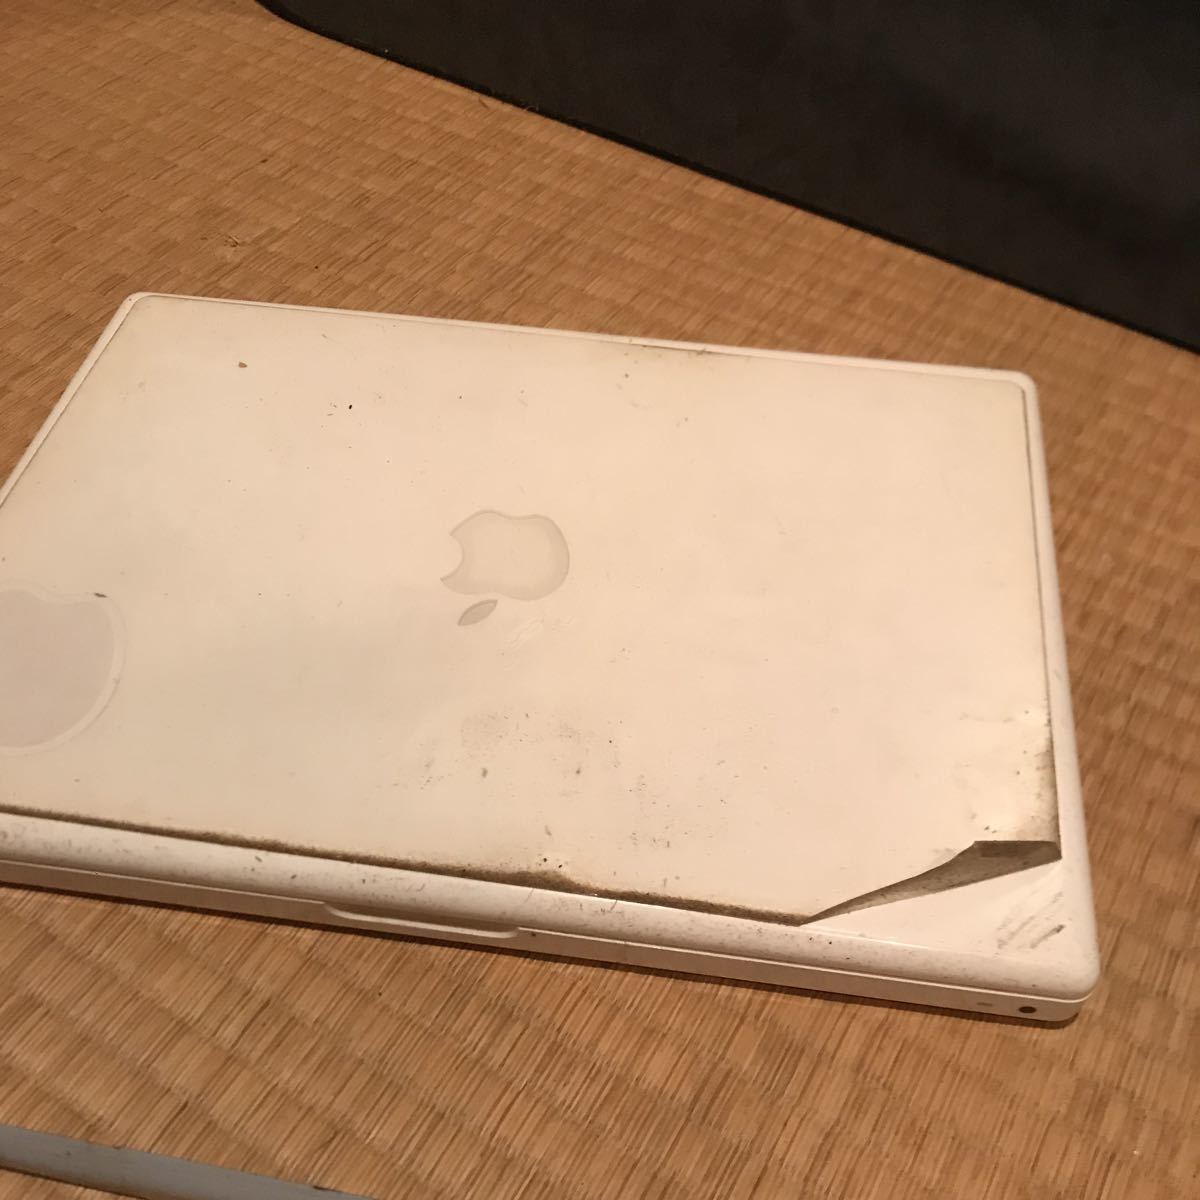 MacBook модель A1181